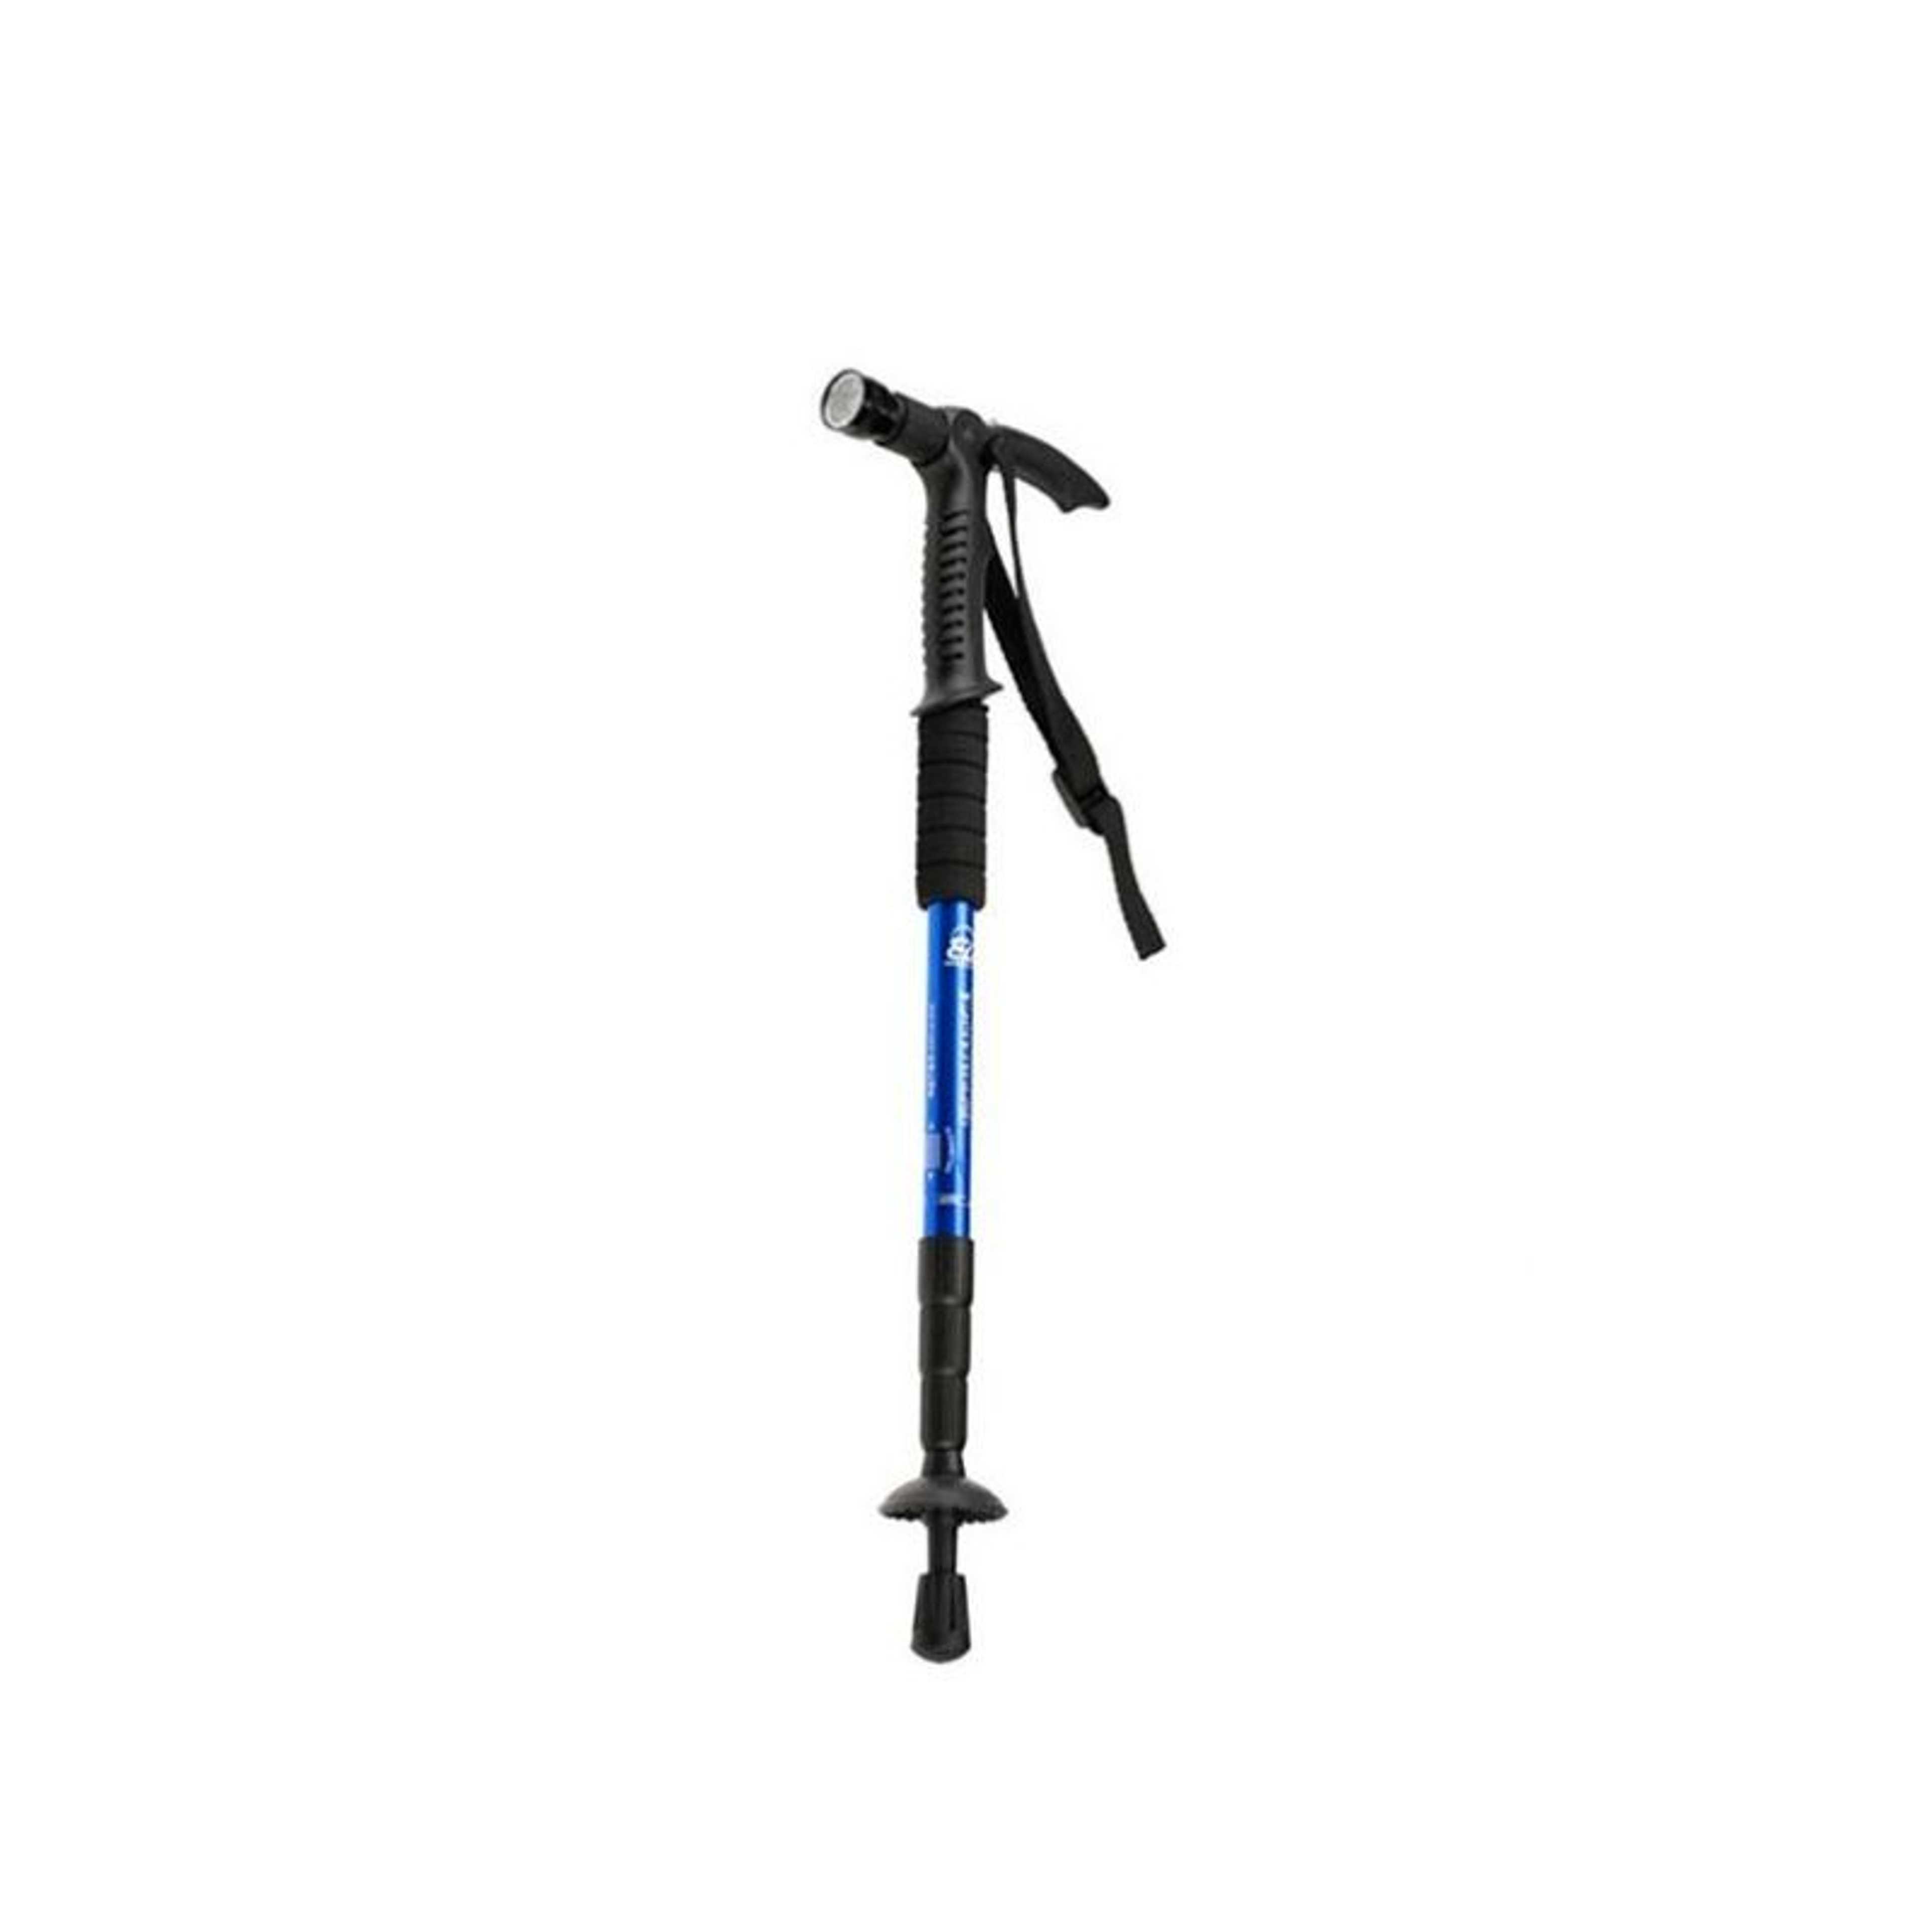 Cane Telescopic Walking Stick Adjustable Trekking Hiking Pole with led Light for Old Man – Blue